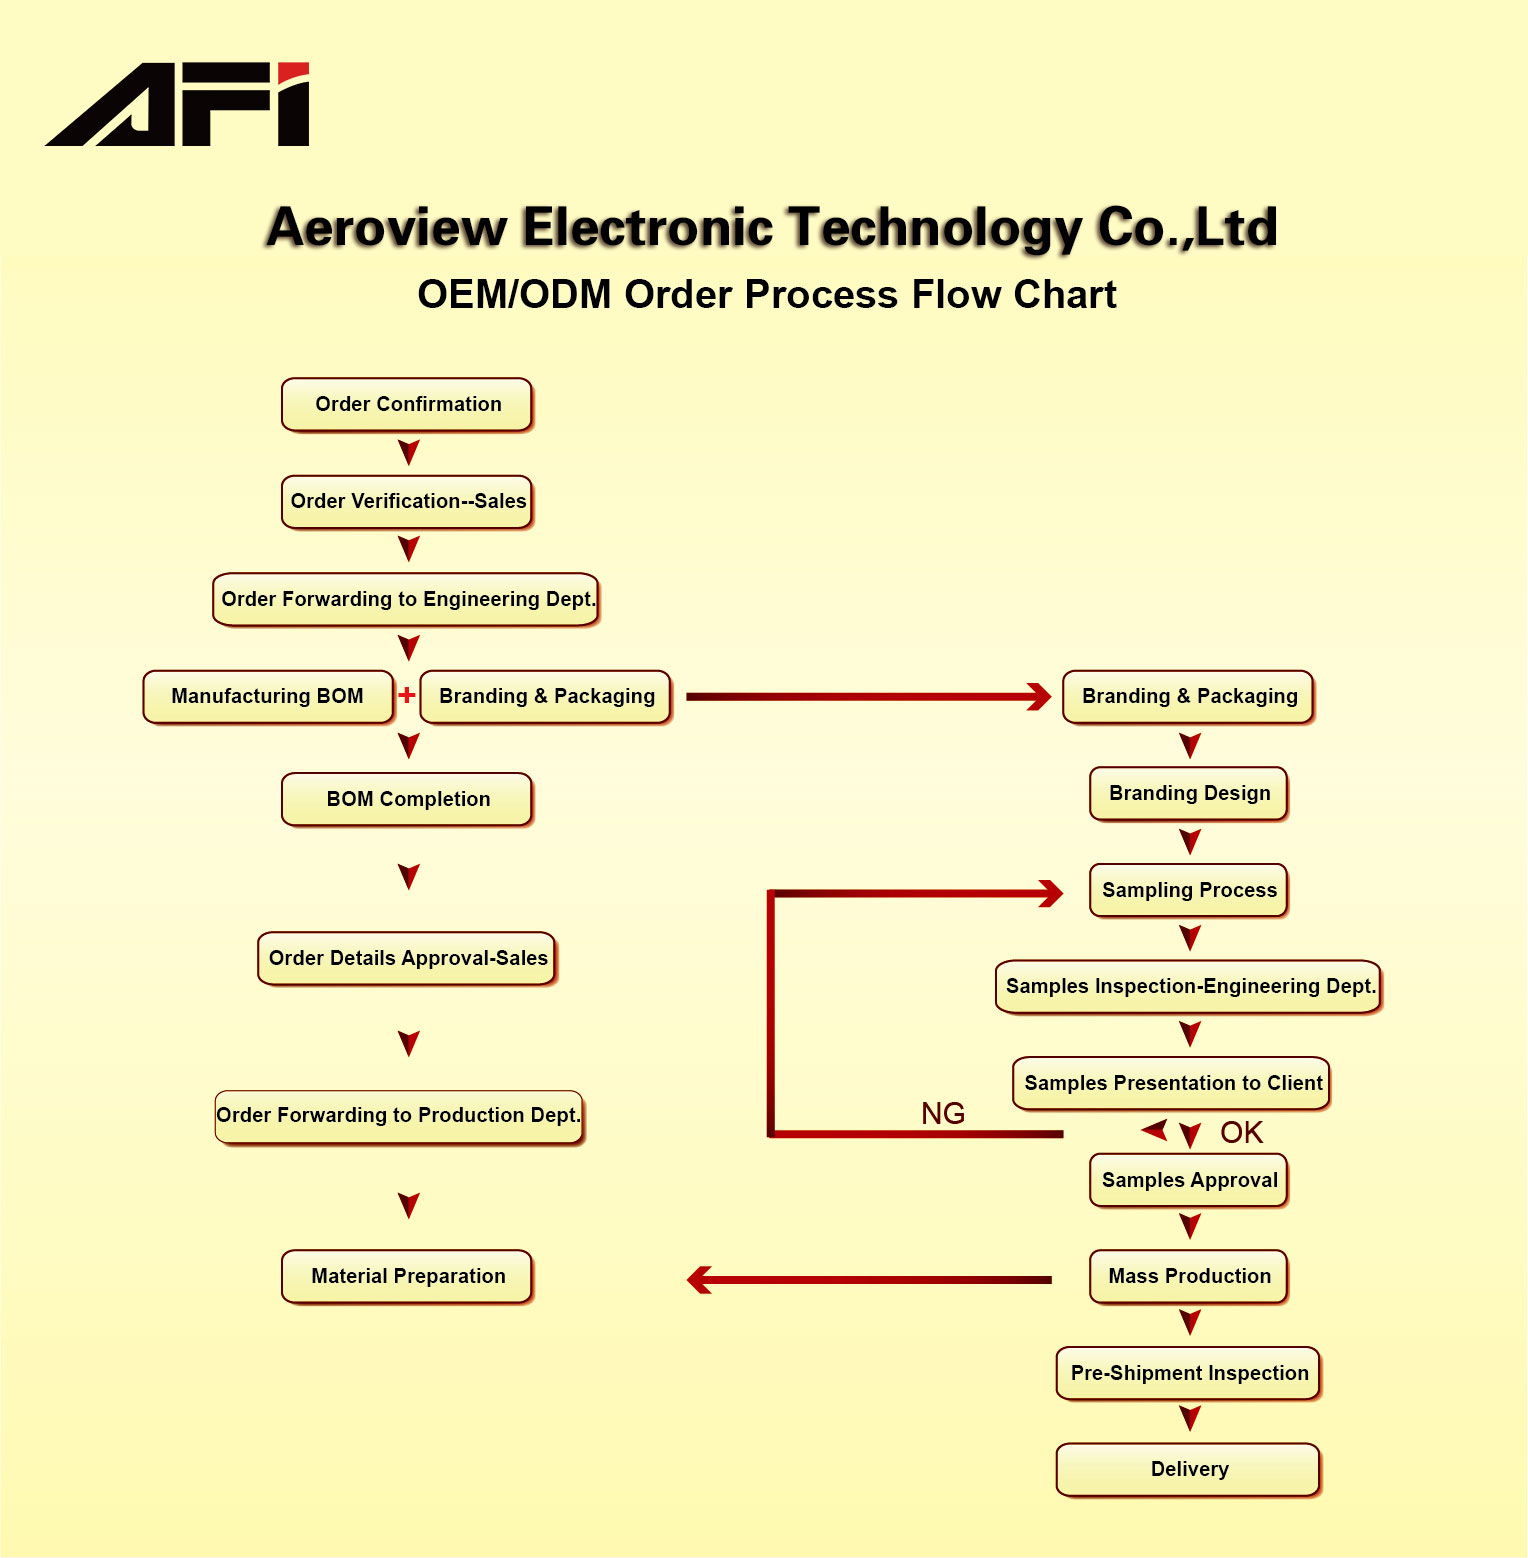 AFI_OEM_ODM_Order_Process_Flow_Chart.jpg